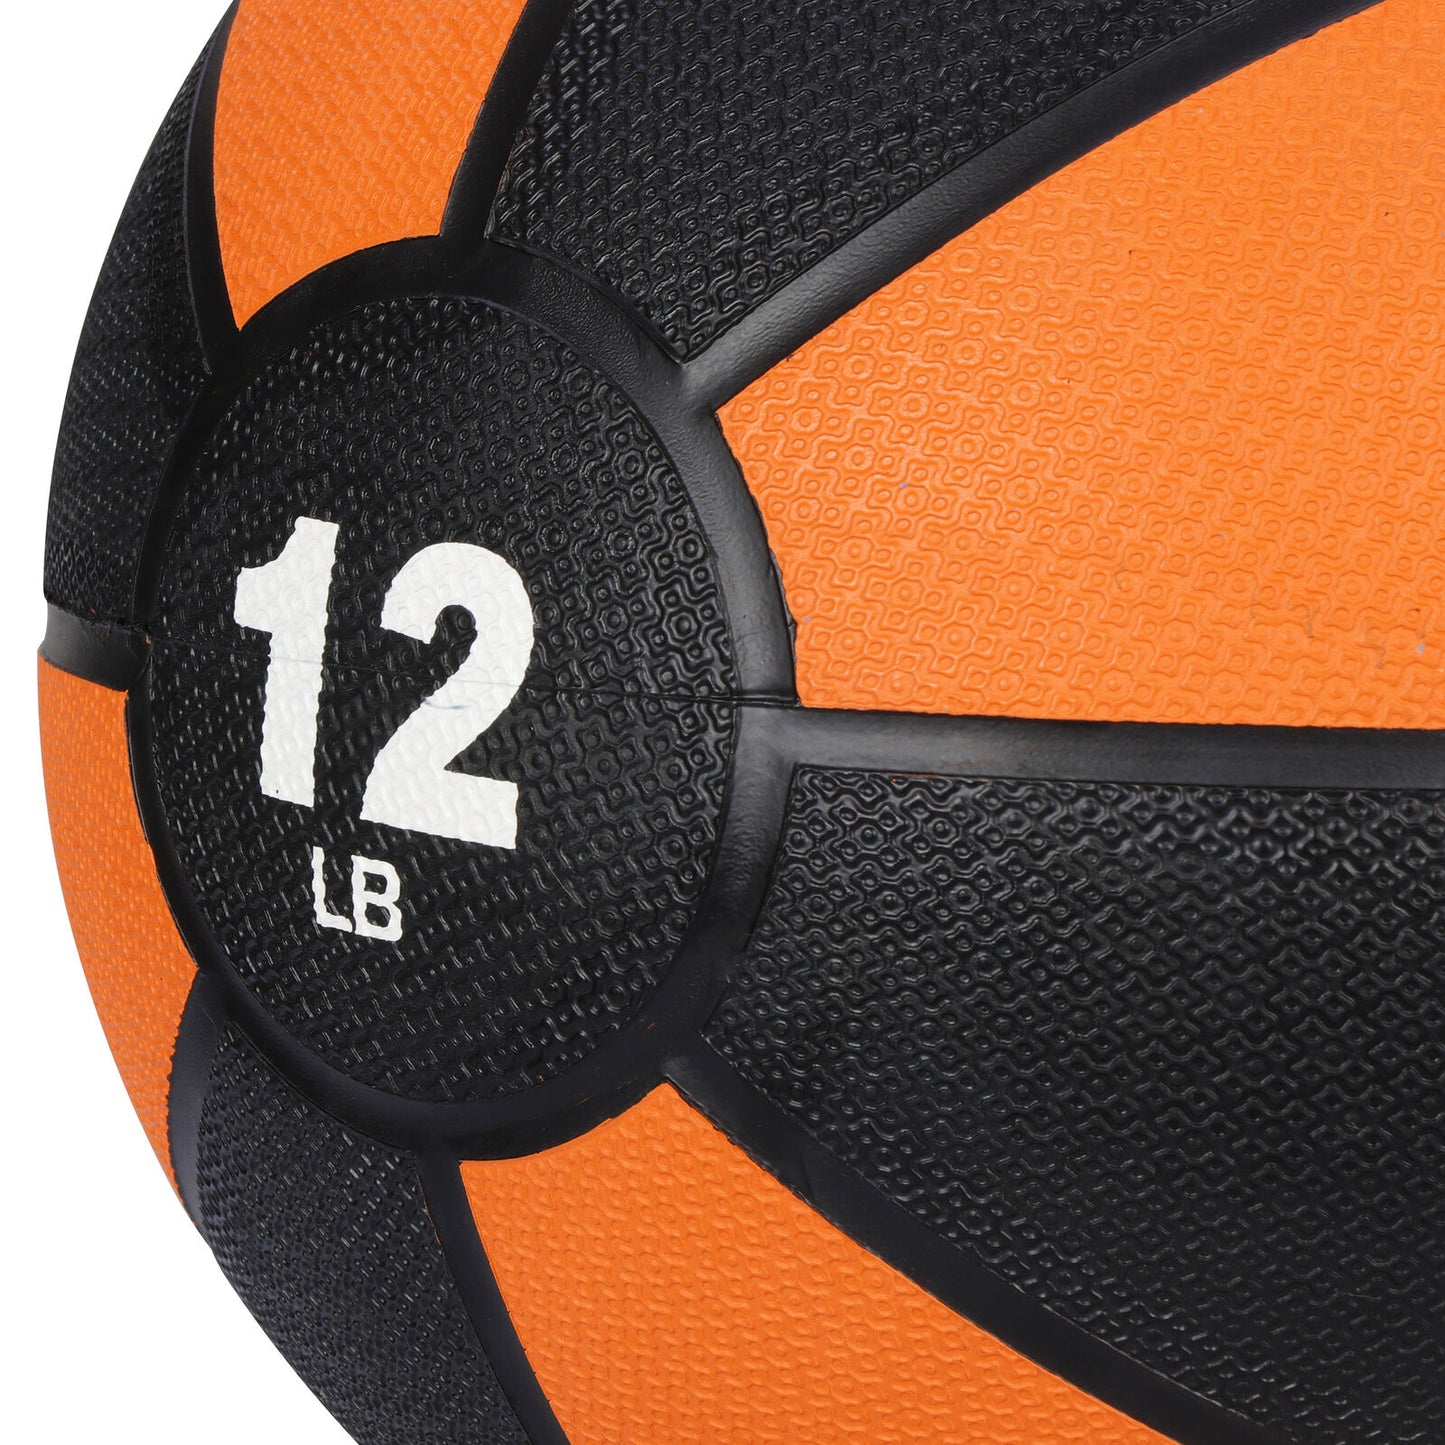 12lb Body Sport Exercise  Medicine Ball for Home Gym Balance Stability Pilates